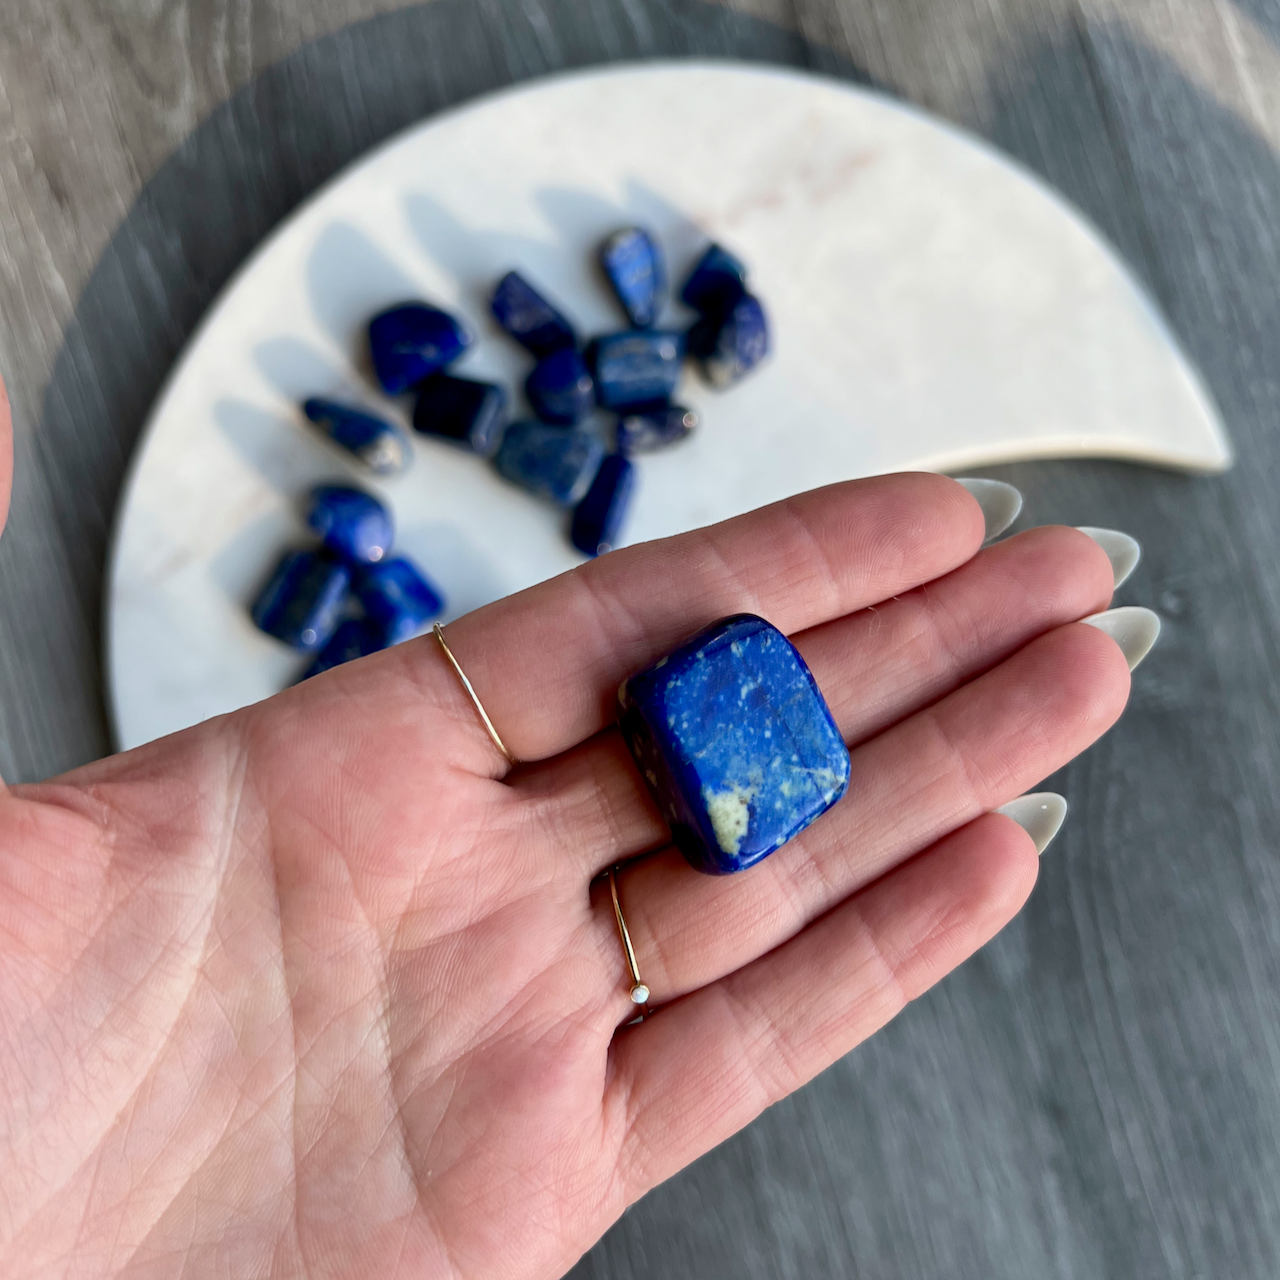 Lapis Lazuli Tumbled Crystal